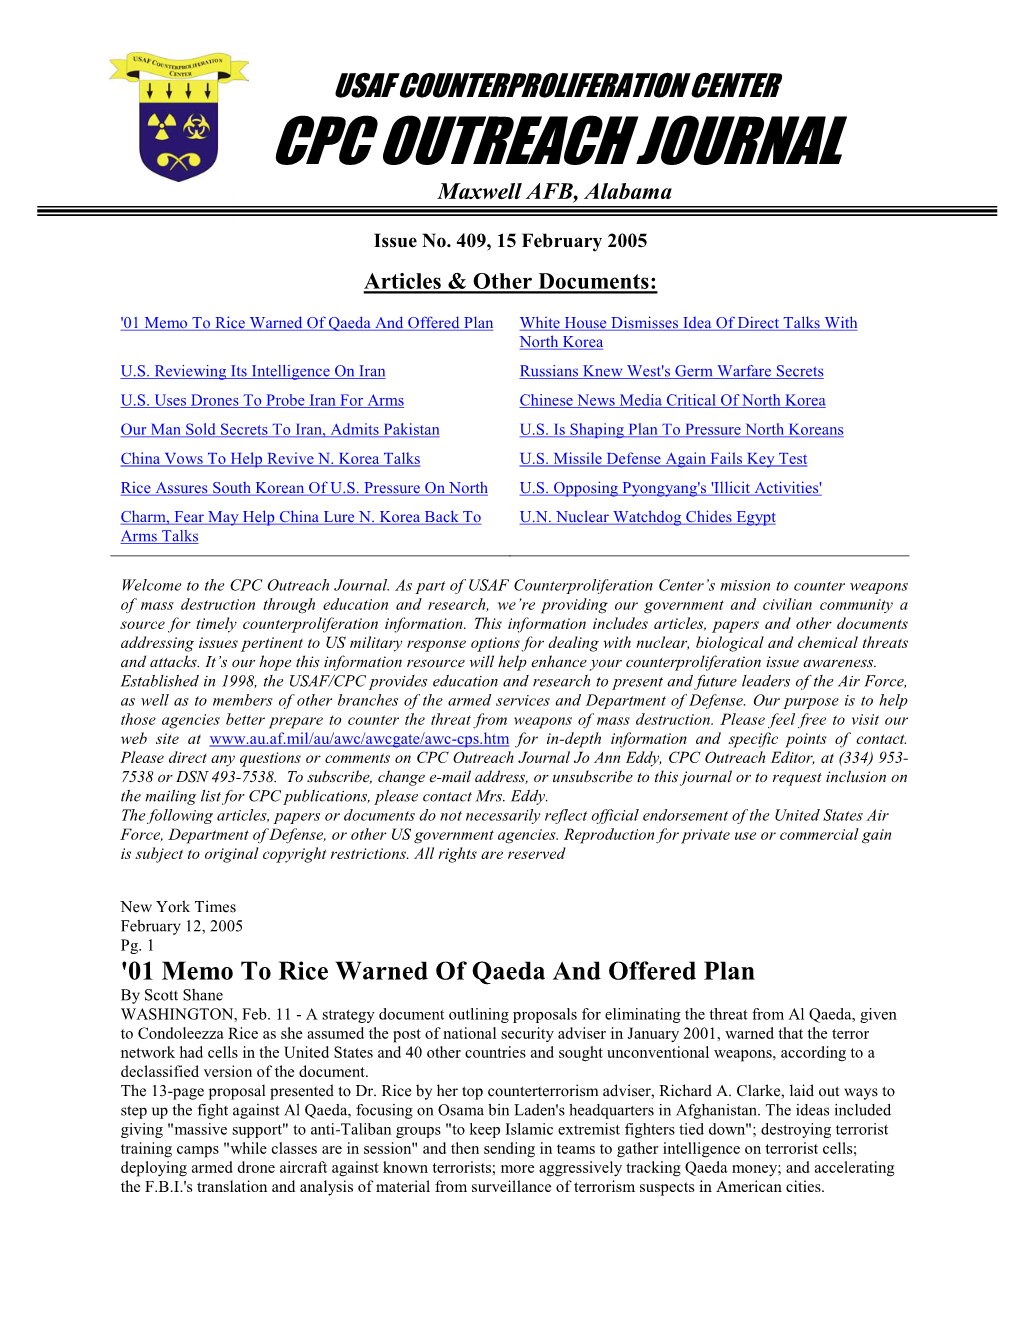 USAF Counterproliferation Center CPC Outreach Journal #409